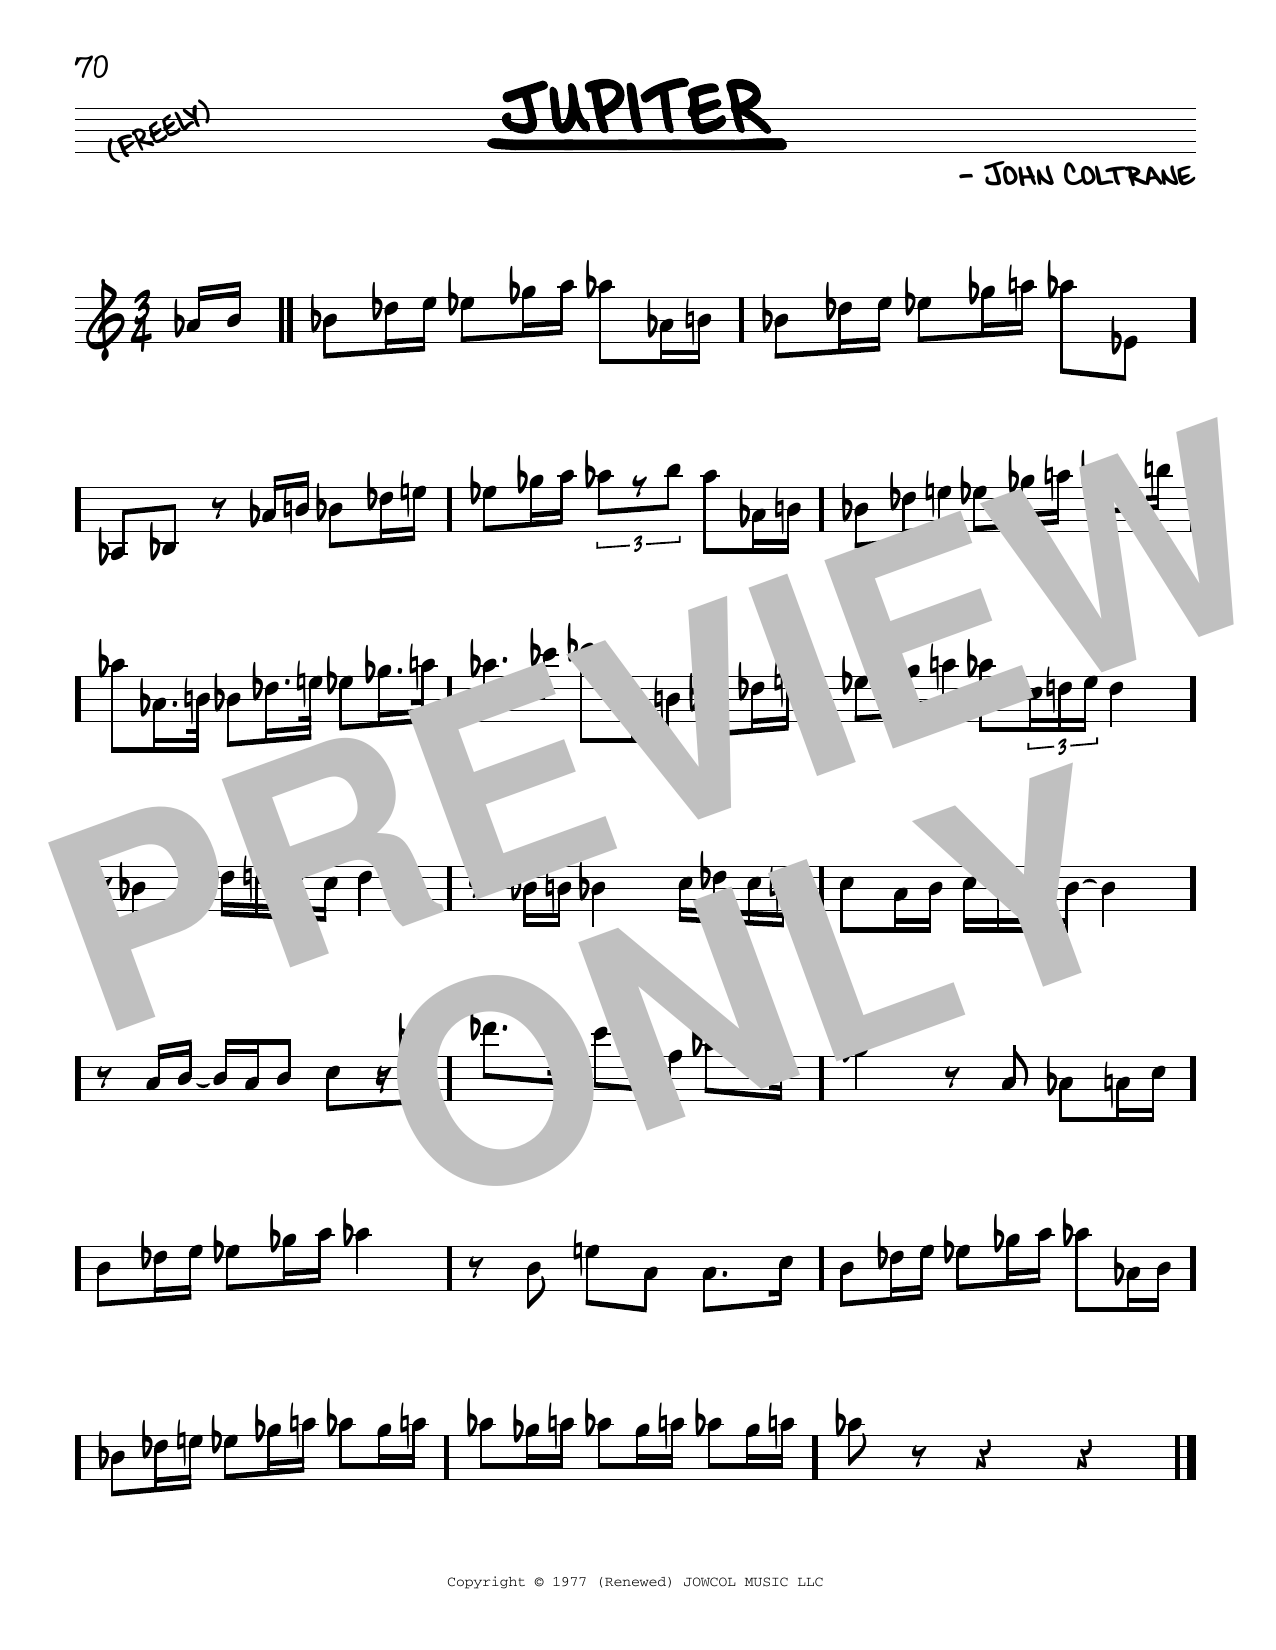 John Coltrane Jupiter Sheet Music Notes & Chords for Real Book – Melody & Chords - Download or Print PDF